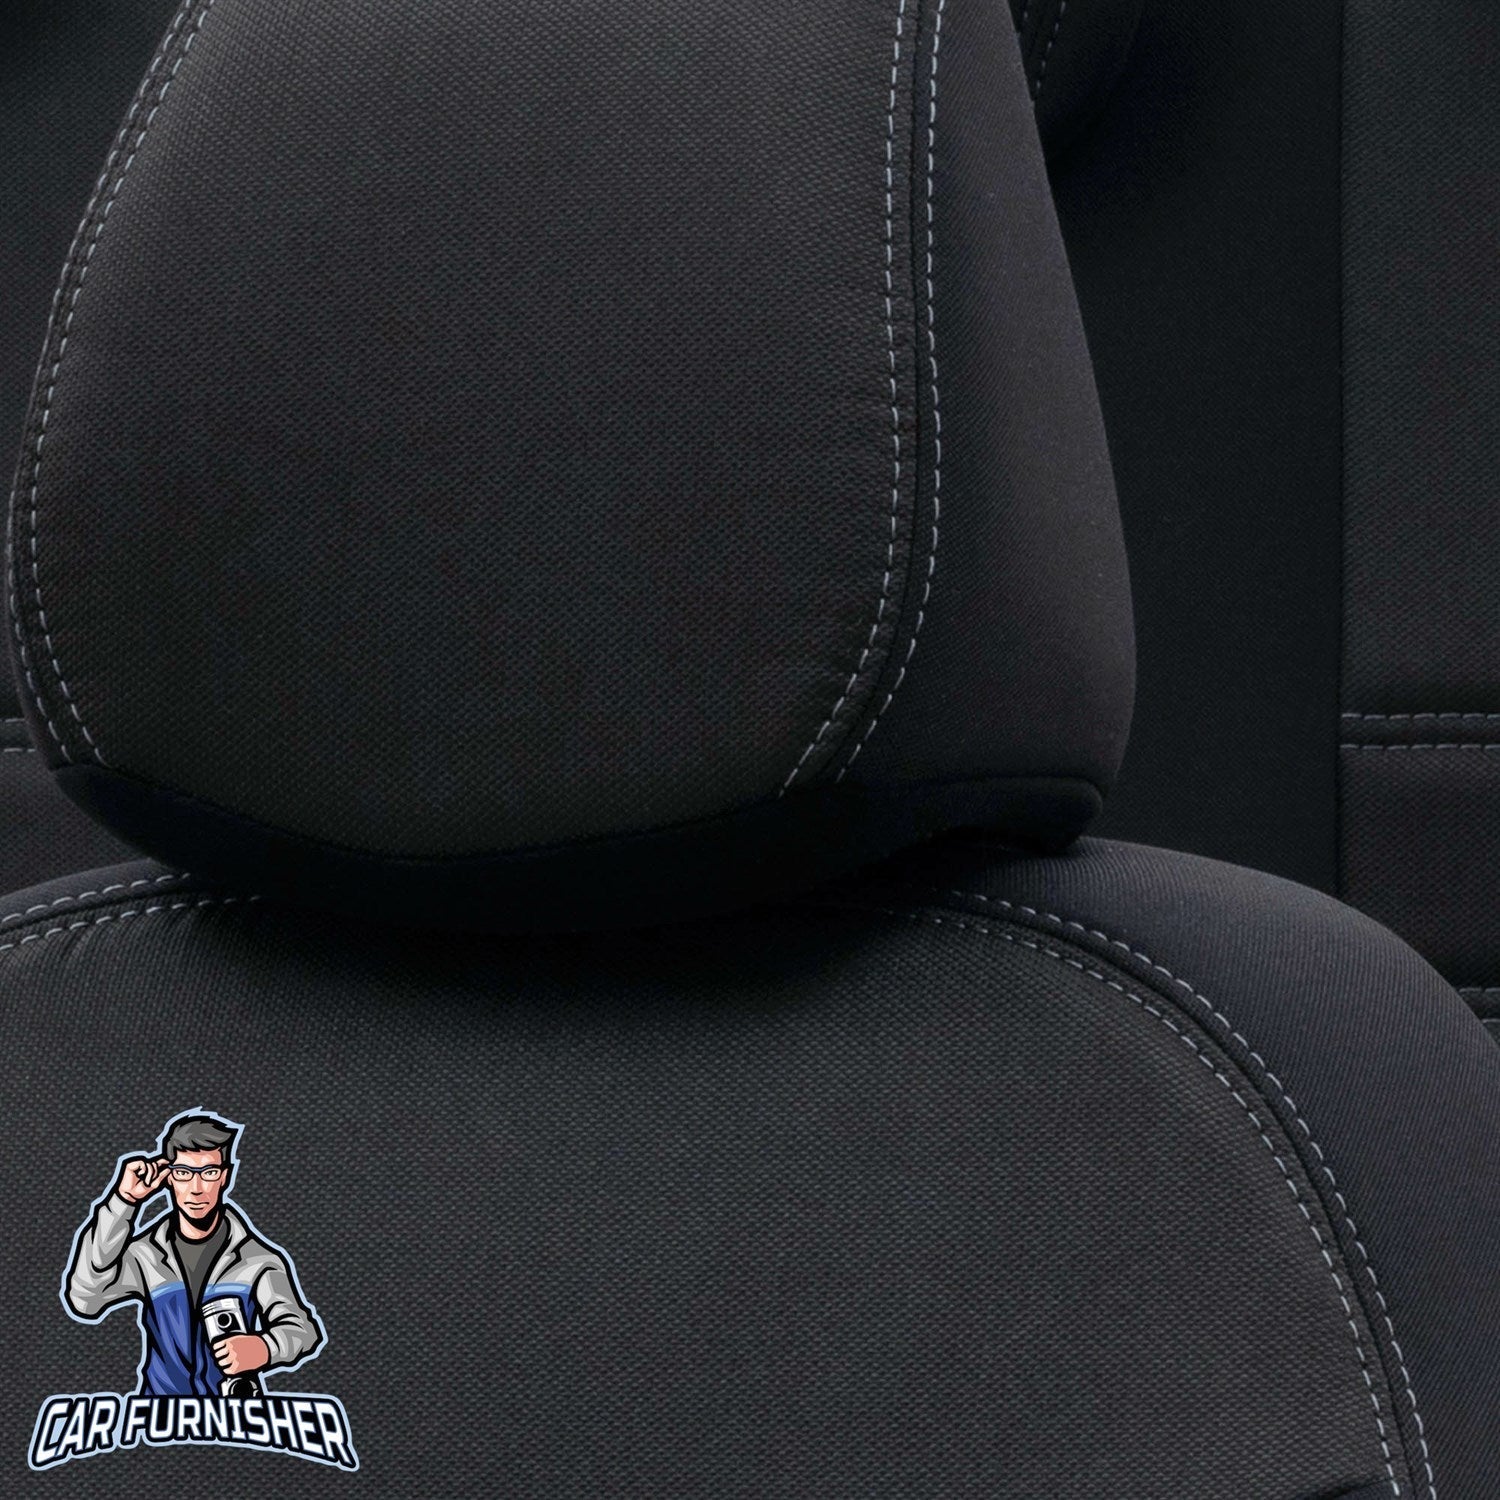 Citroen C1 Seat Covers Original Jacquard Design Black Jacquard Fabric